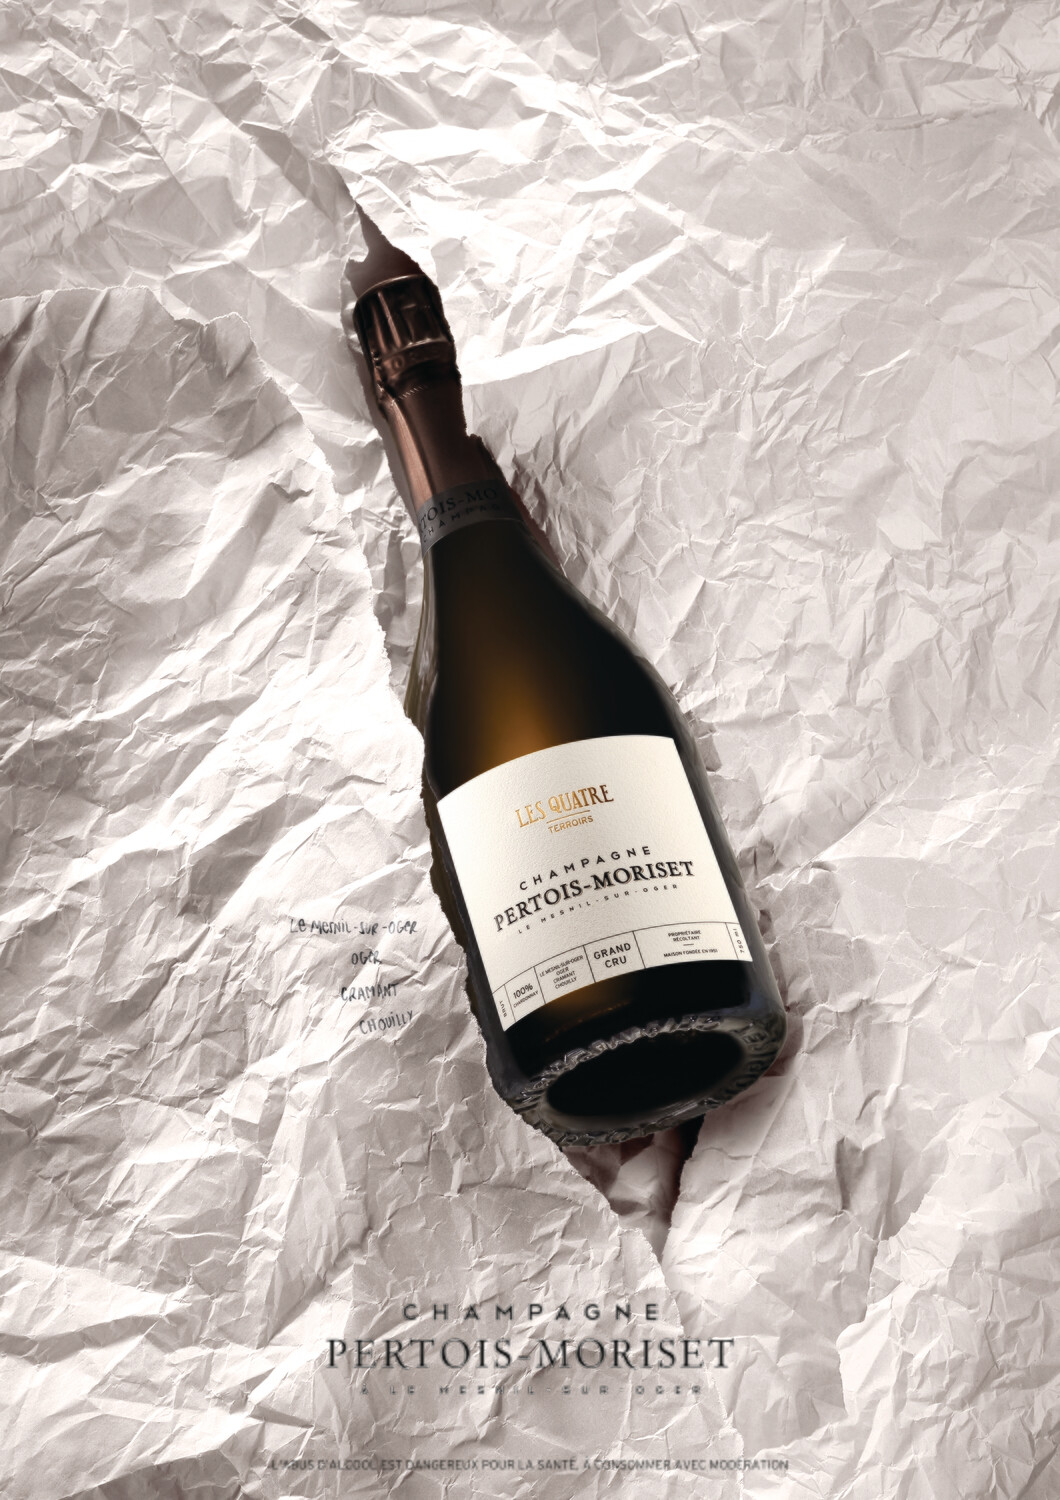 Champagne - Grand Cru
Pertois-Moriset 
blanc de blancs